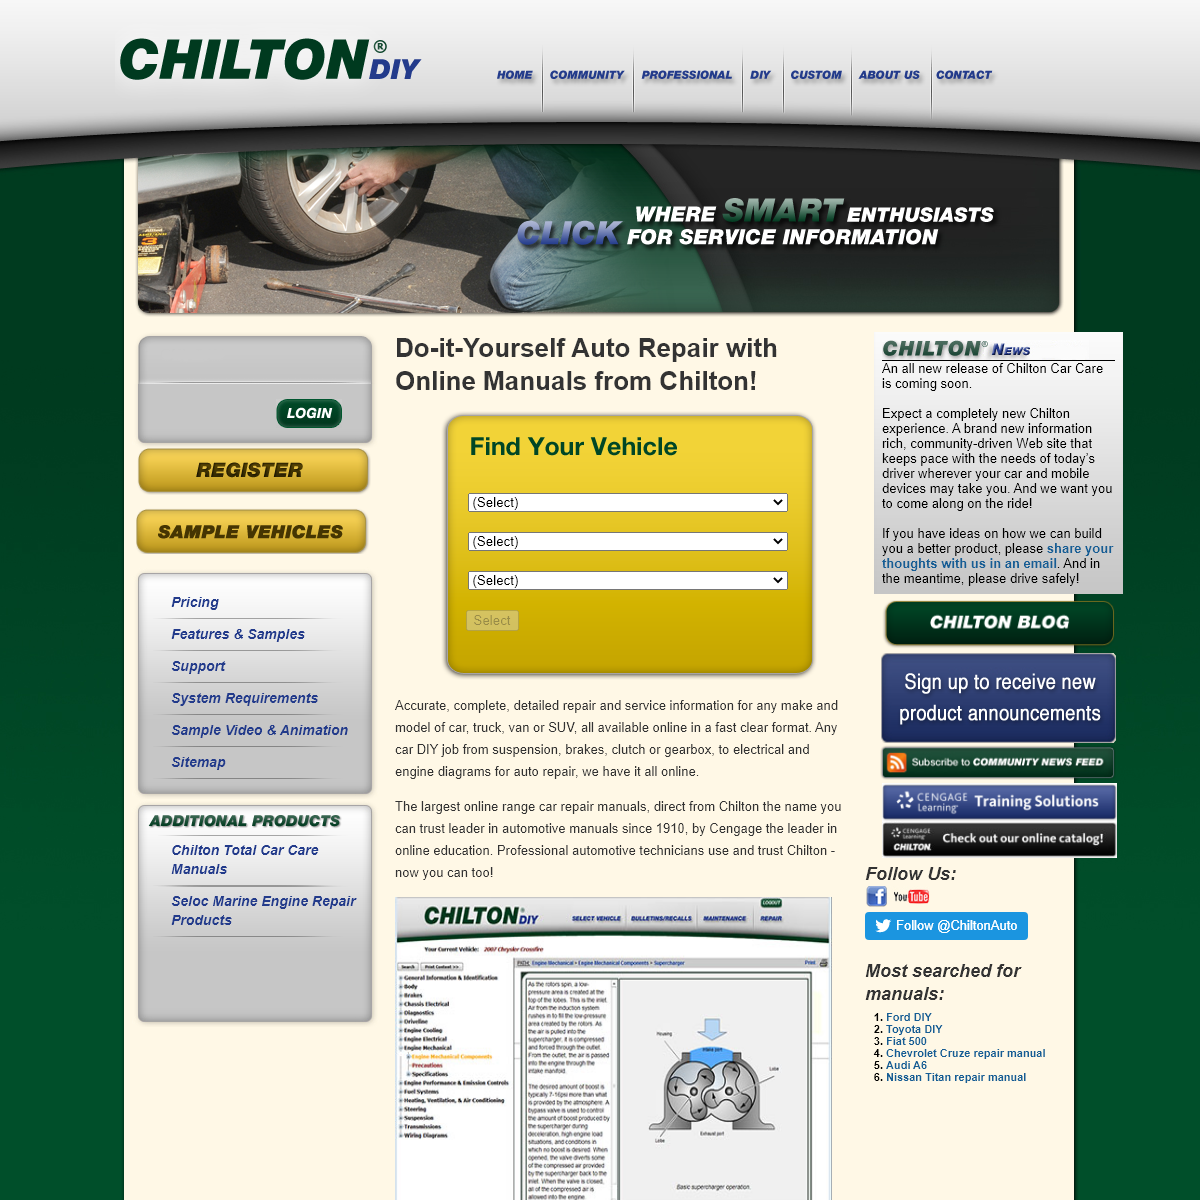 A complete backup of chiltondiy.com